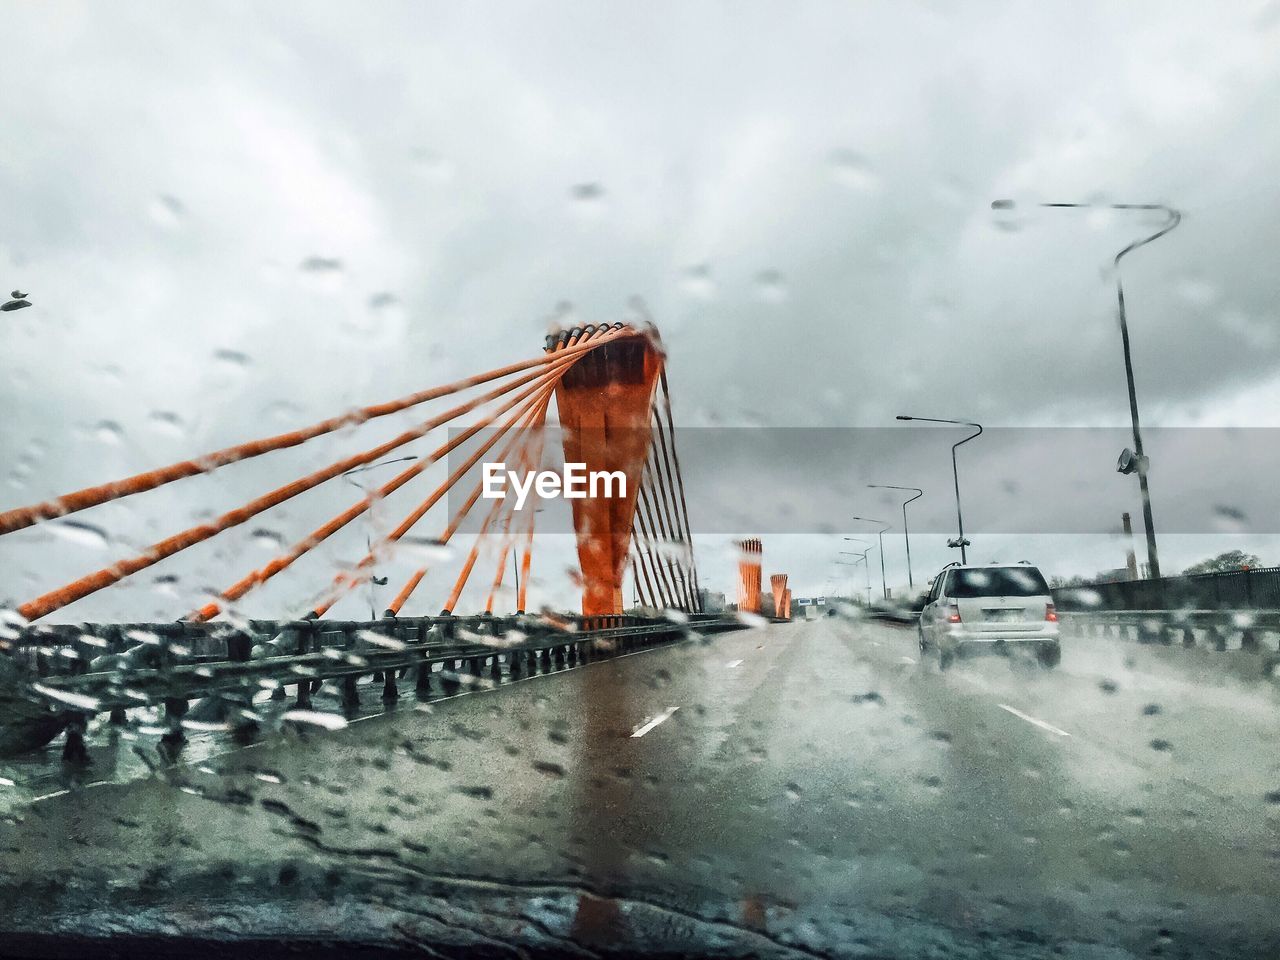 Car on bridge seen through wet windshield during rainy season